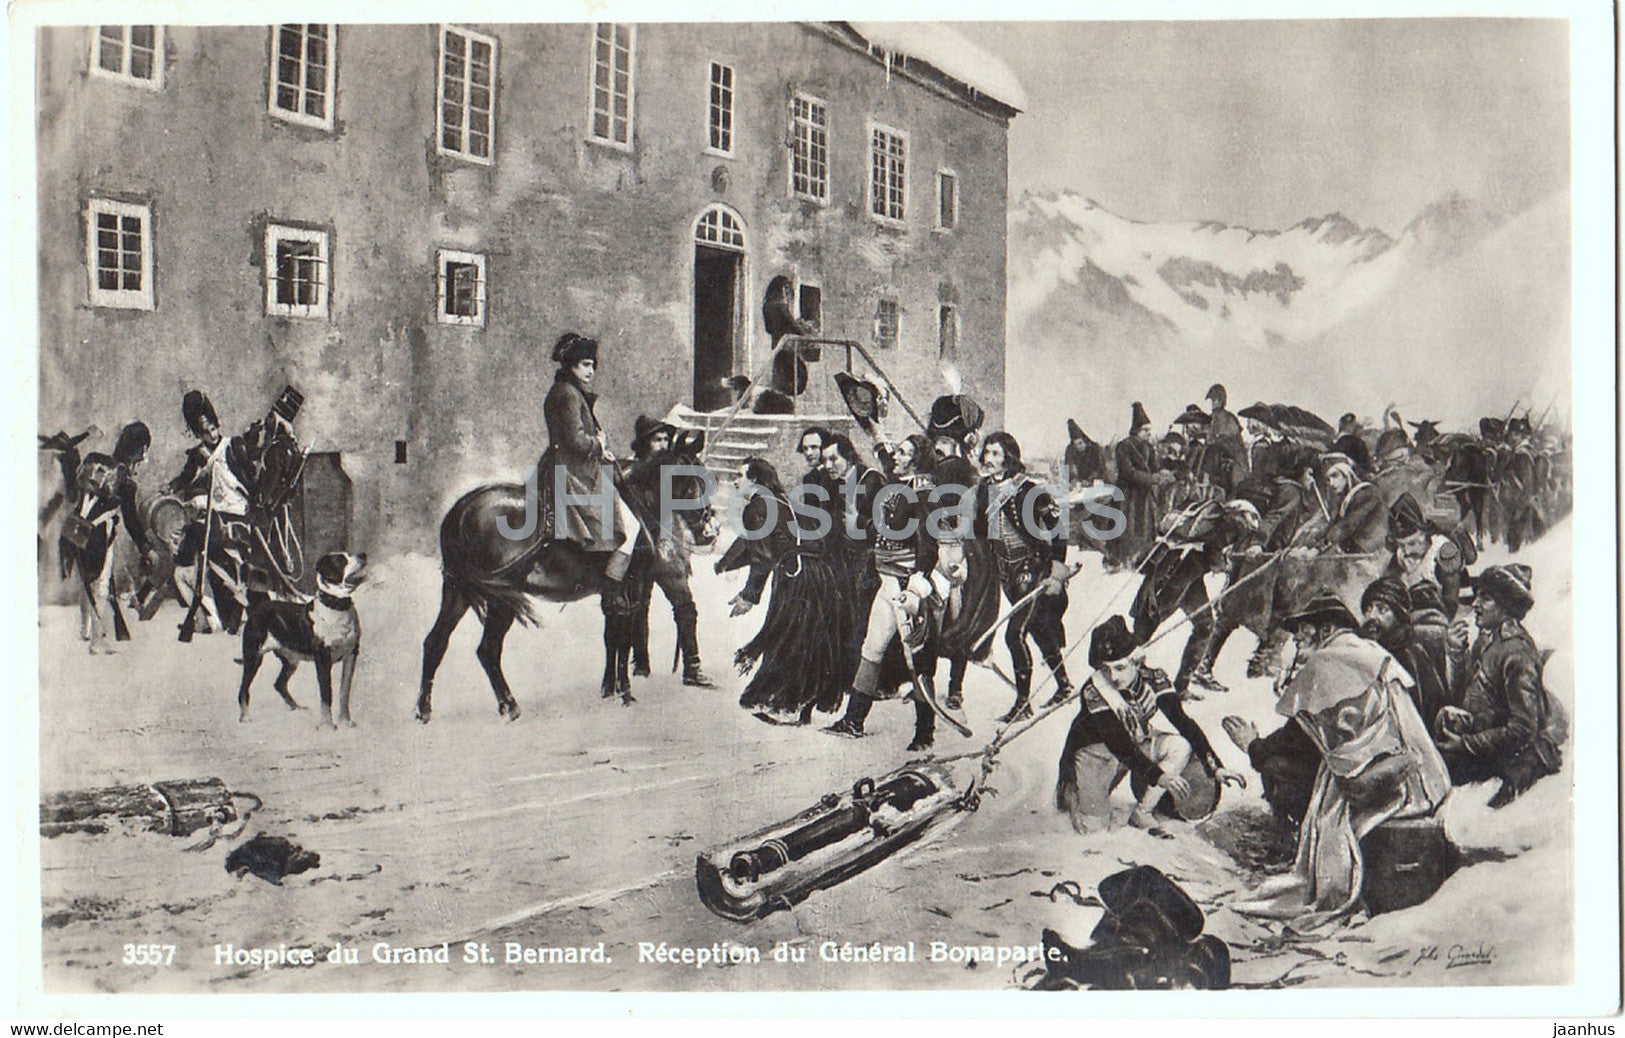 Hospice du Grand St Bernard - Reception du General Bonaparte - horse - dog - 3557 - old postcard - Switzerland - unused - JH Postcards